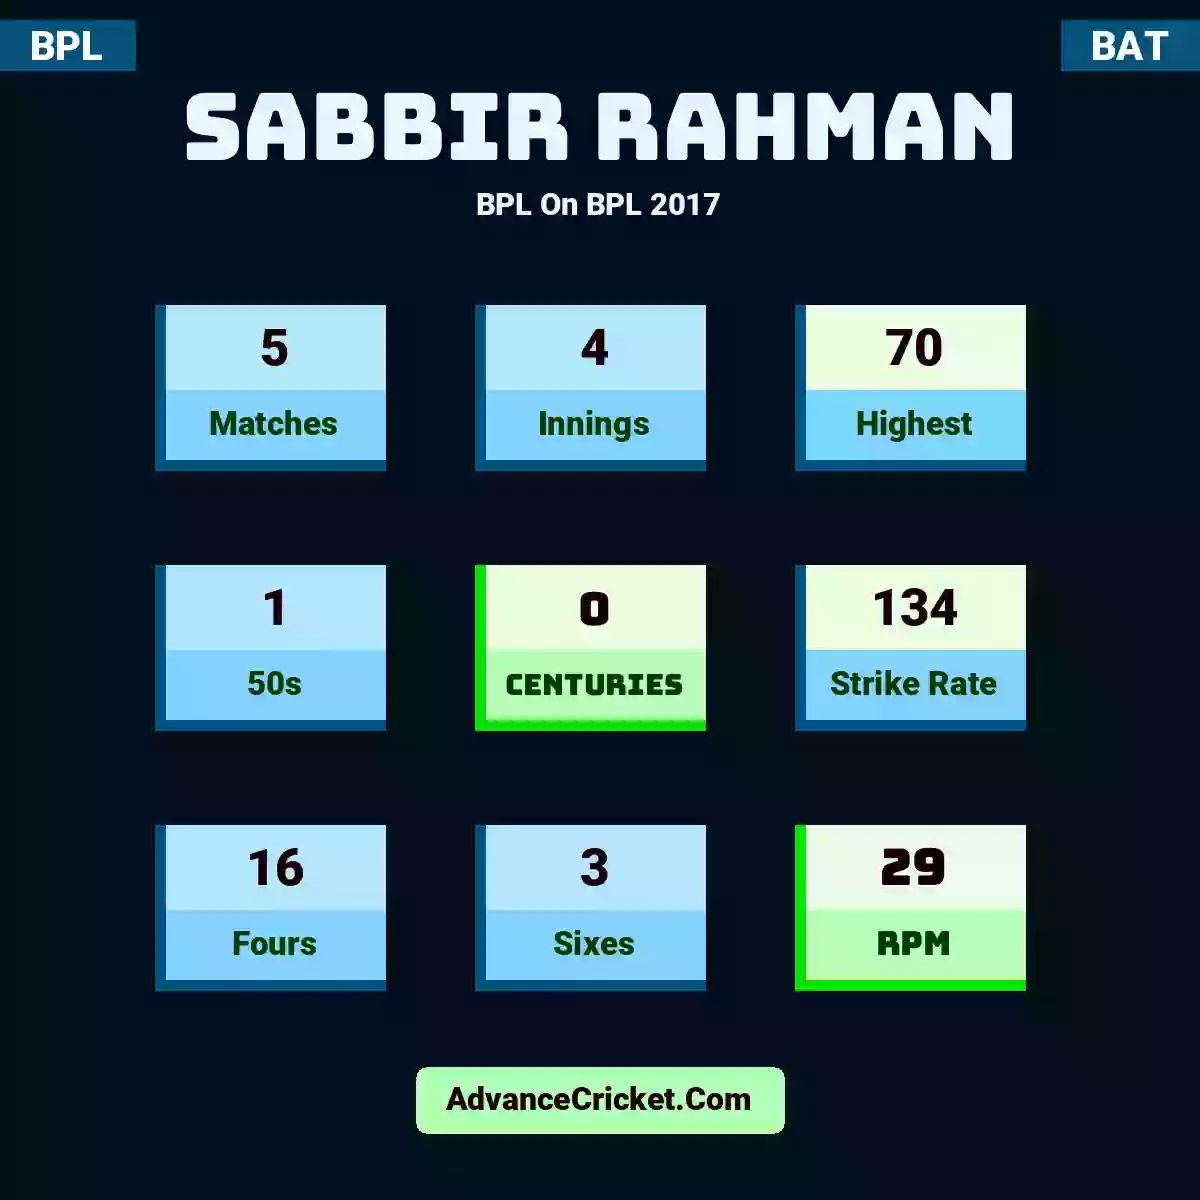 Sabbir Rahman BPL  On BPL 2017, Sabbir Rahman played 5 matches, scored 70 runs as highest, 1 half-centuries, and 0 centuries, with a strike rate of 134. S.Rahman hit 16 fours and 3 sixes, with an RPM of 29.